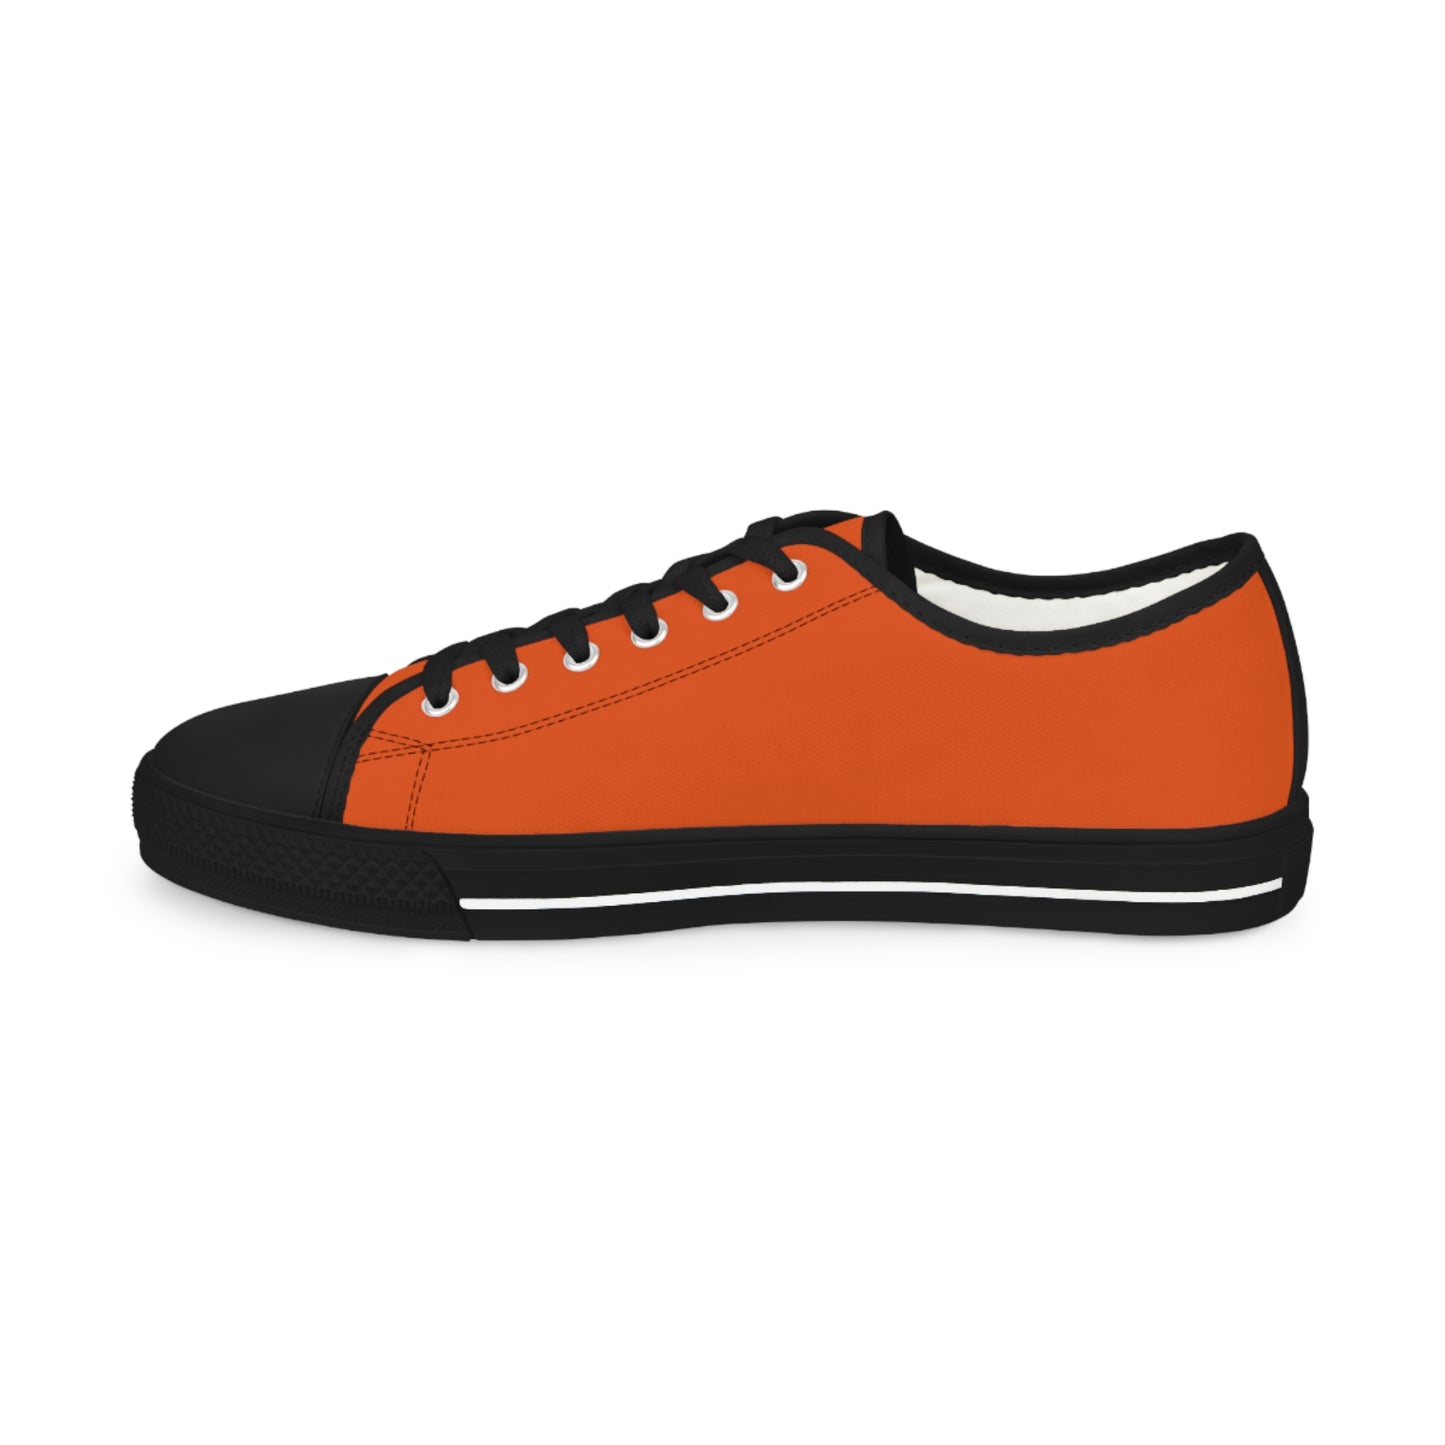 Men's Low Top Sneakers - Dark Orange US 14 Black sole